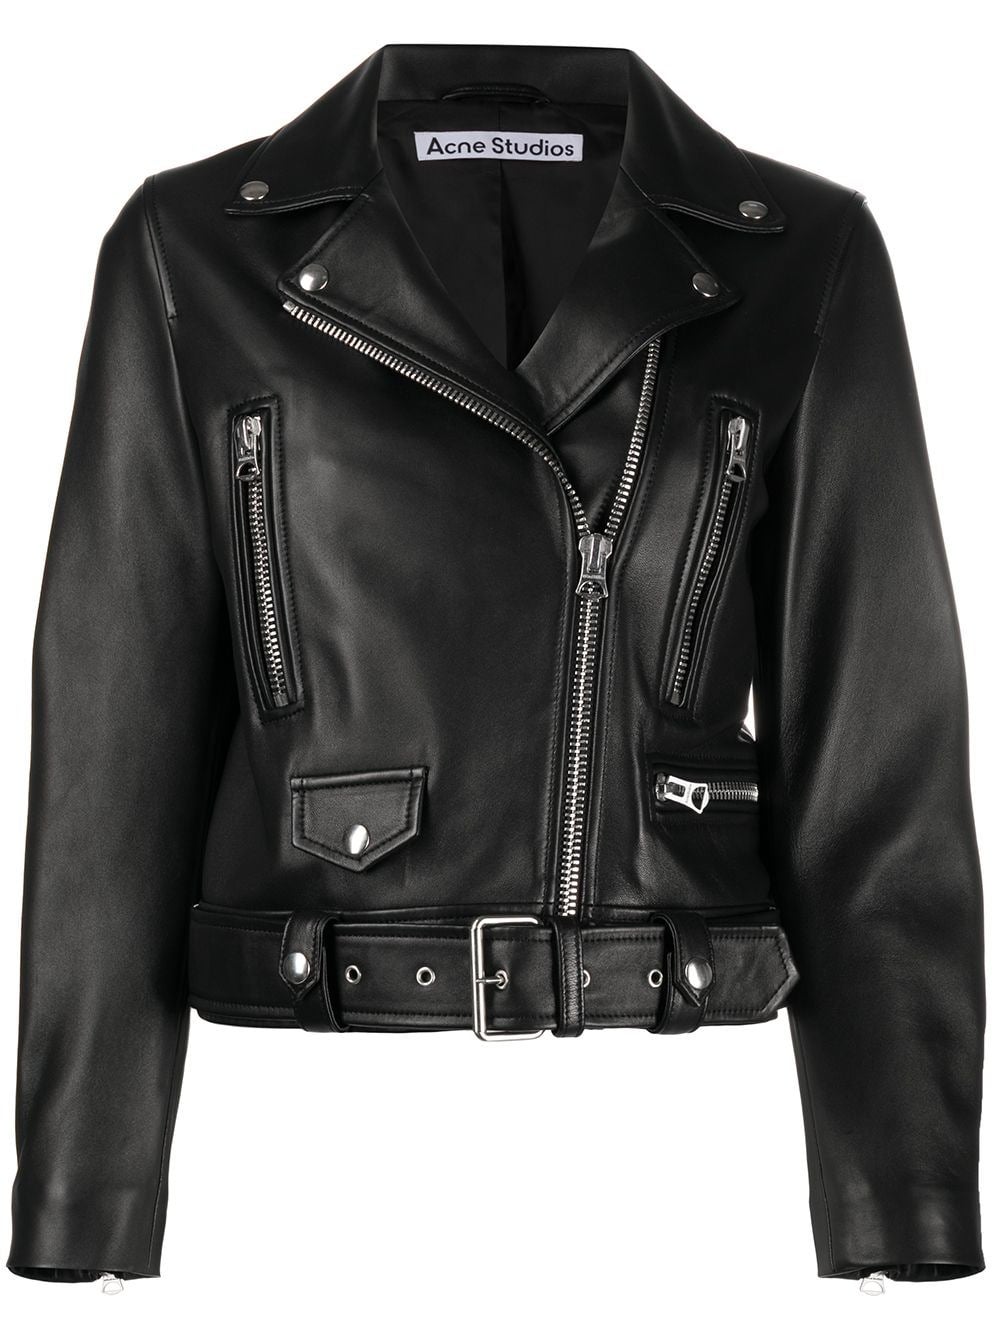 Acne Studios + Acne Studios leather biker jacket